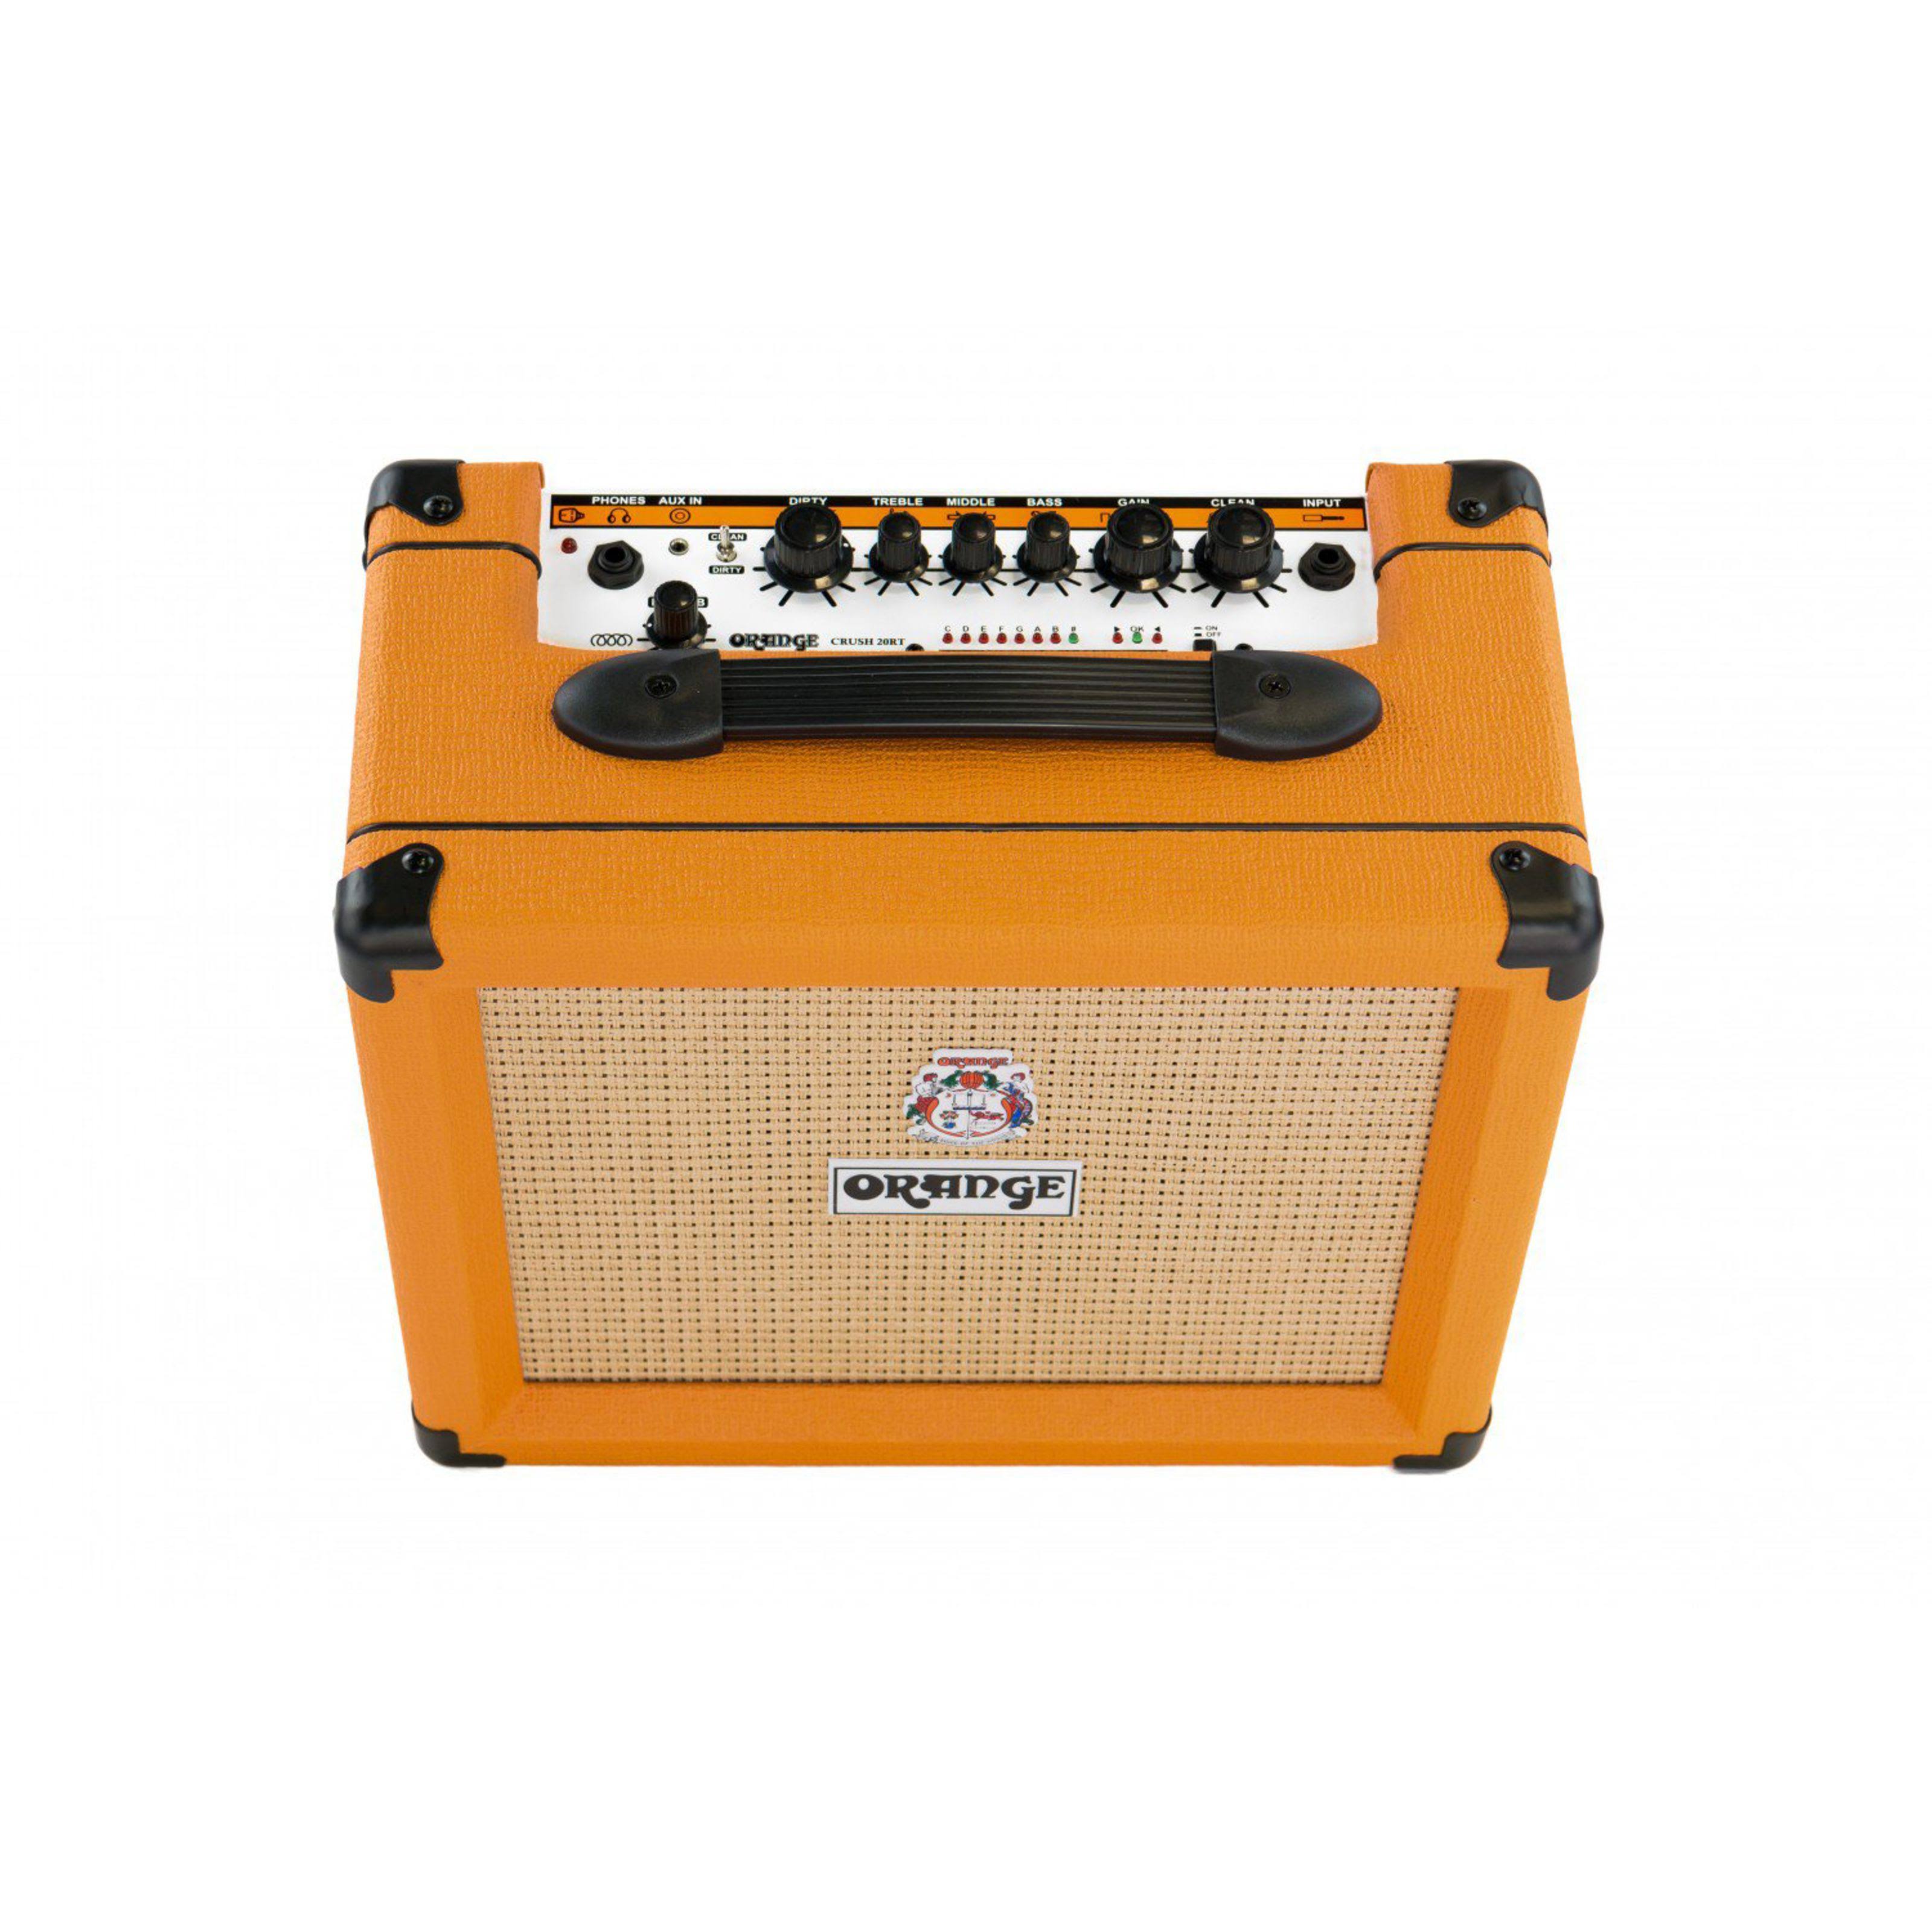 Orange Crush Guitar Amplifier With Reverb - Orange, 20W